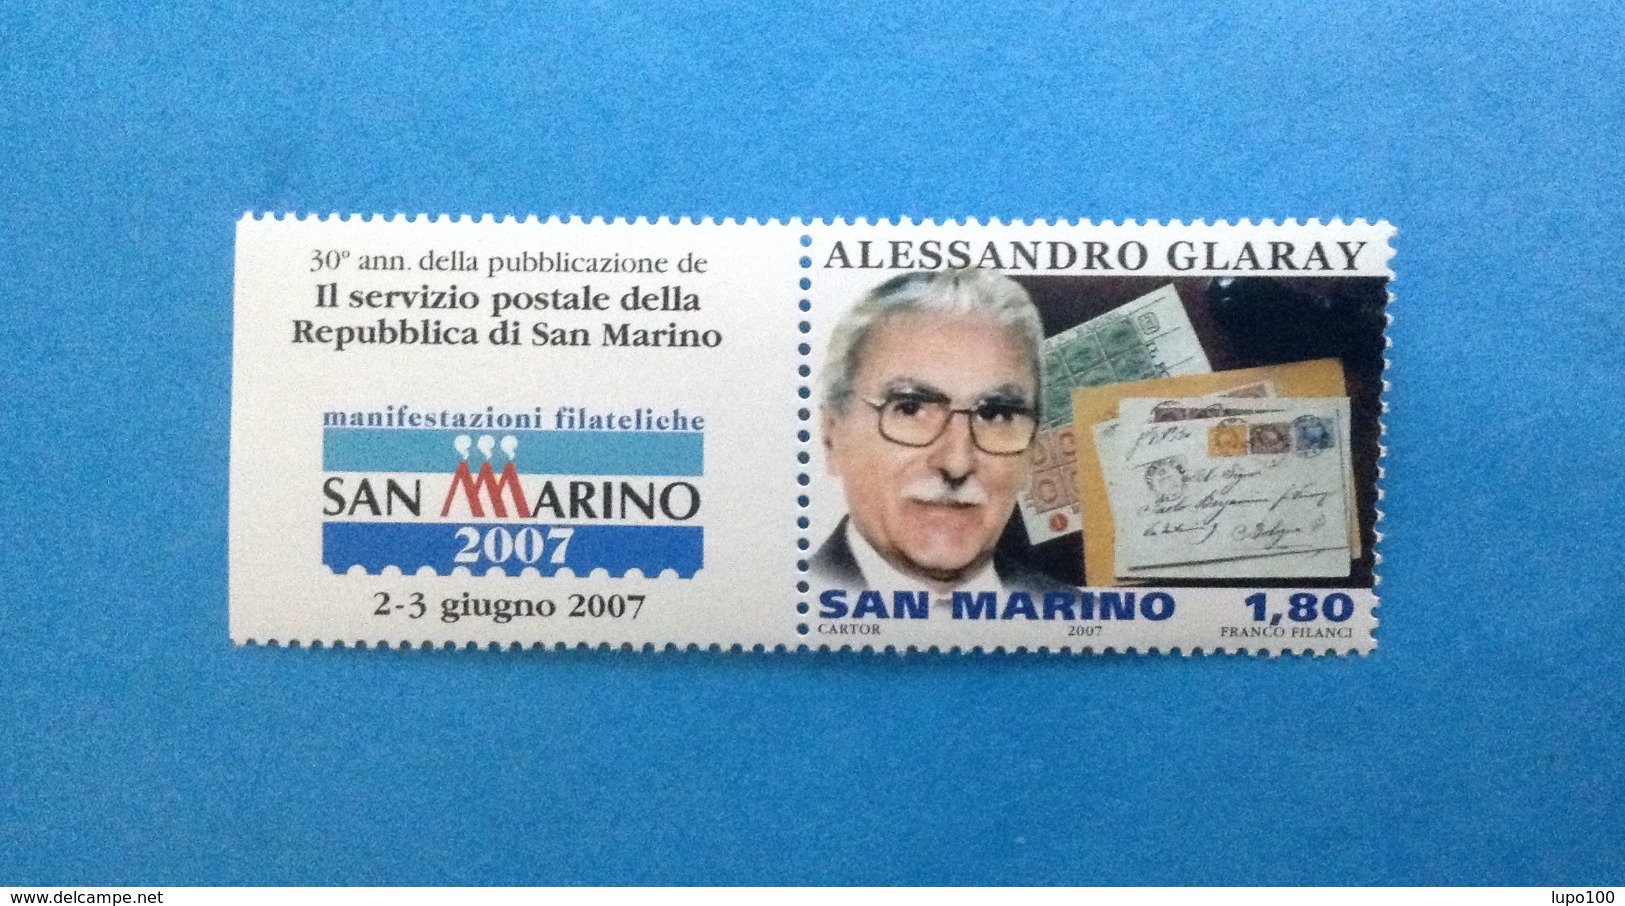 2007 SAN MARINO FRANCOBOLLO NUOVO CON APPENDICE  STAMP NEW MNH** - GLARAY - - Unused Stamps